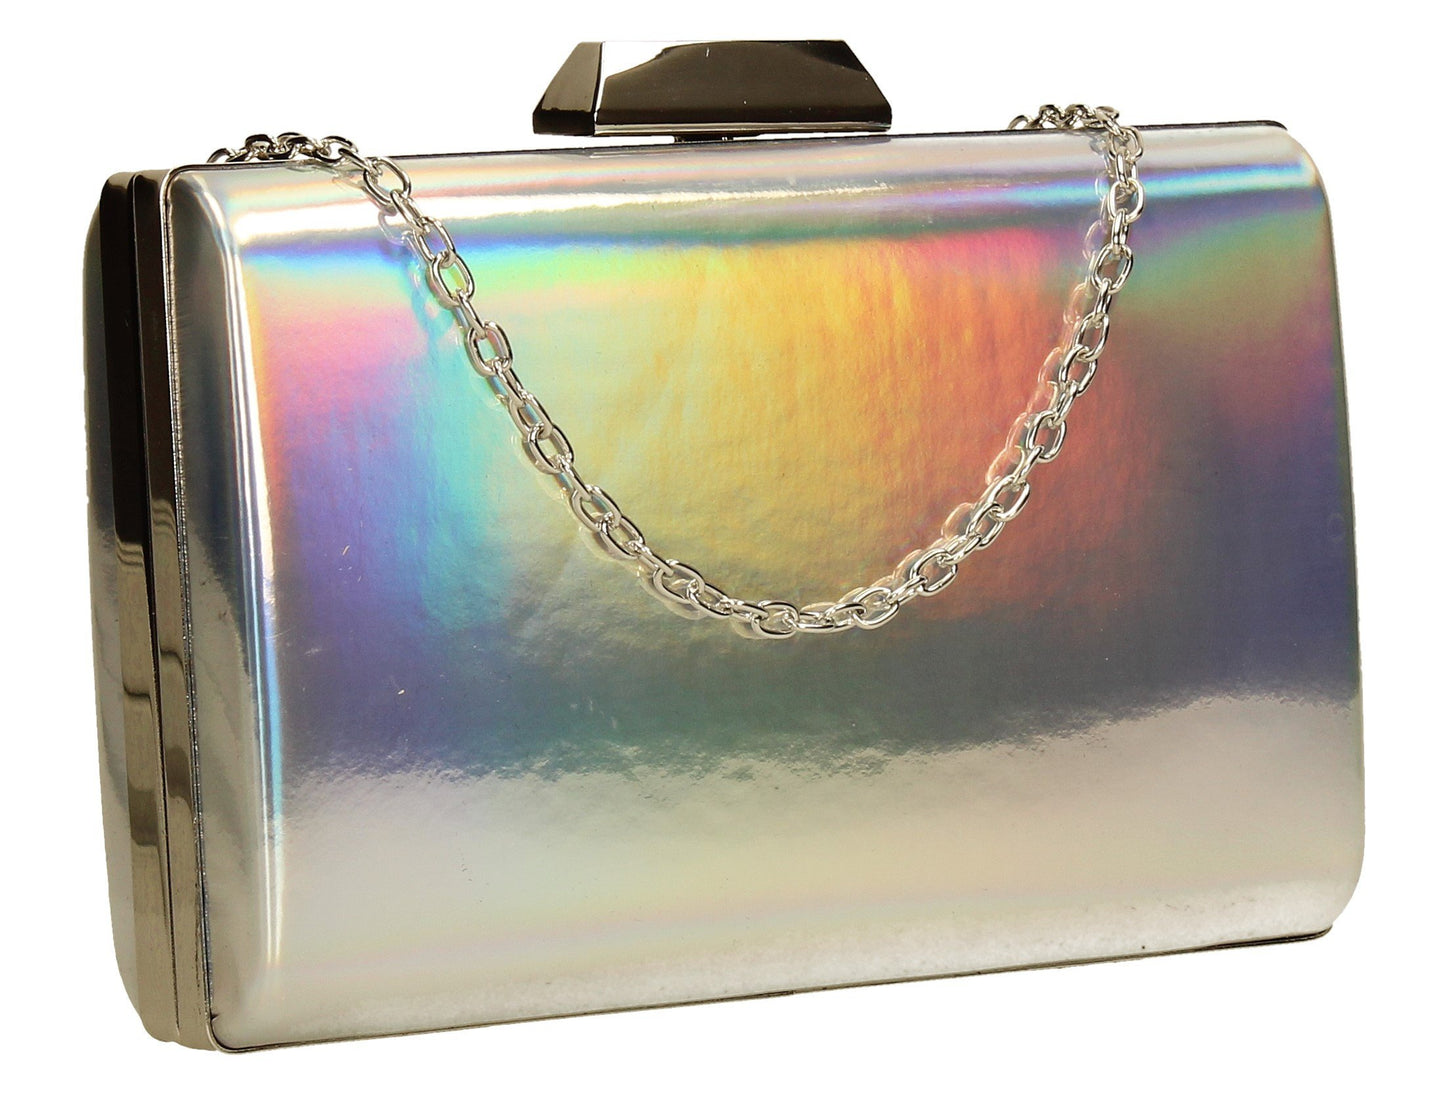 SWANKYSWANS Arizona Metallic Clutch Bag Holograpic Cute Cheap Clutch Bag For Weddings School and Work